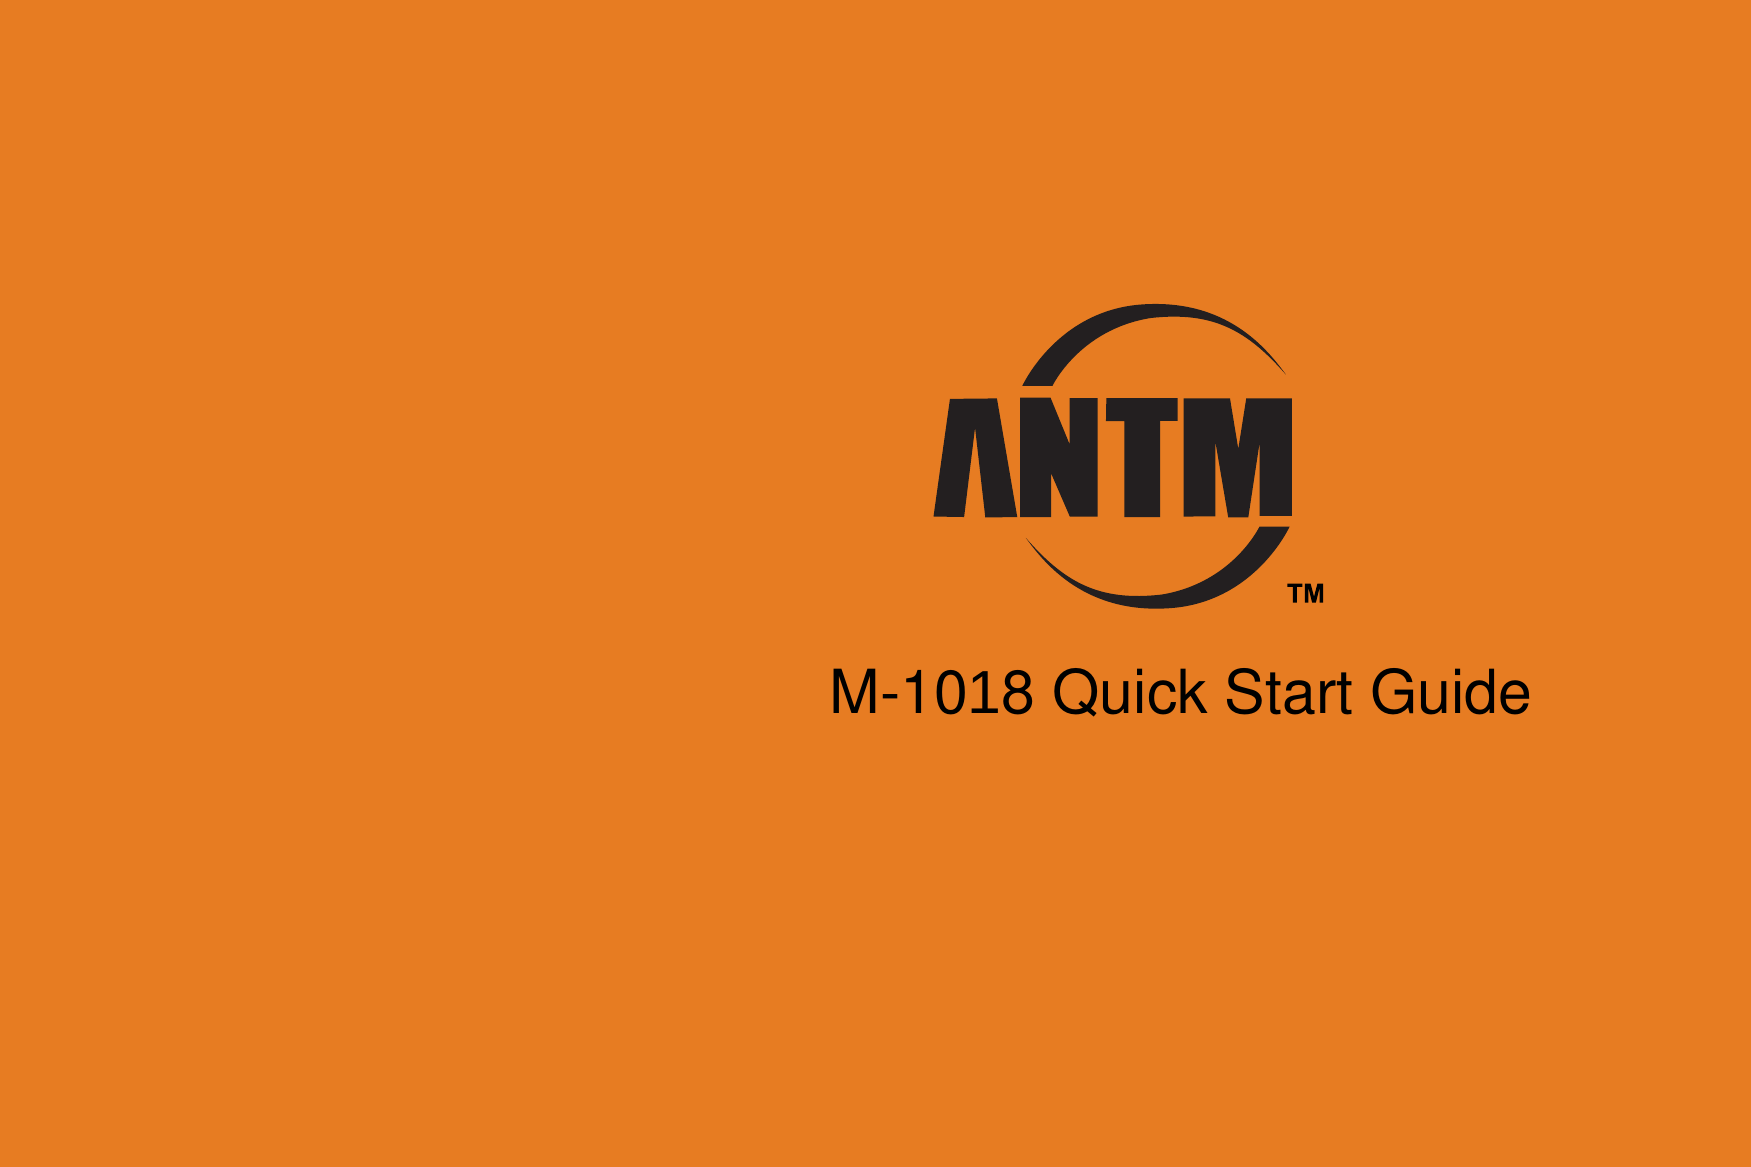 TM-1018 Quick Start Guide